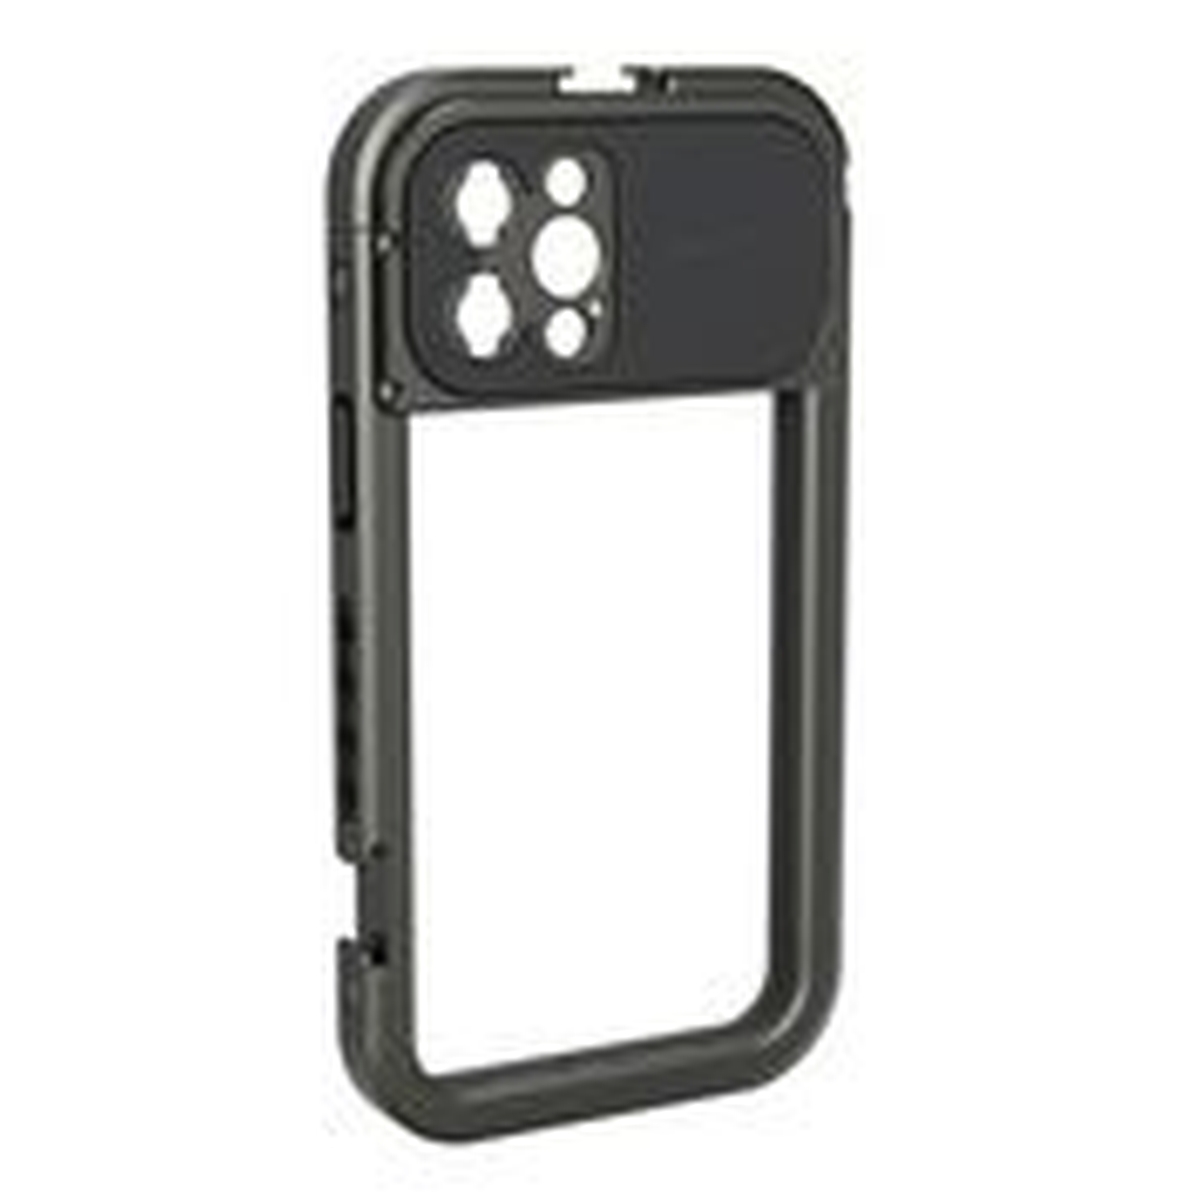 Smallrig 3077 Pro Mobile Cage für iPhone 12 Max 